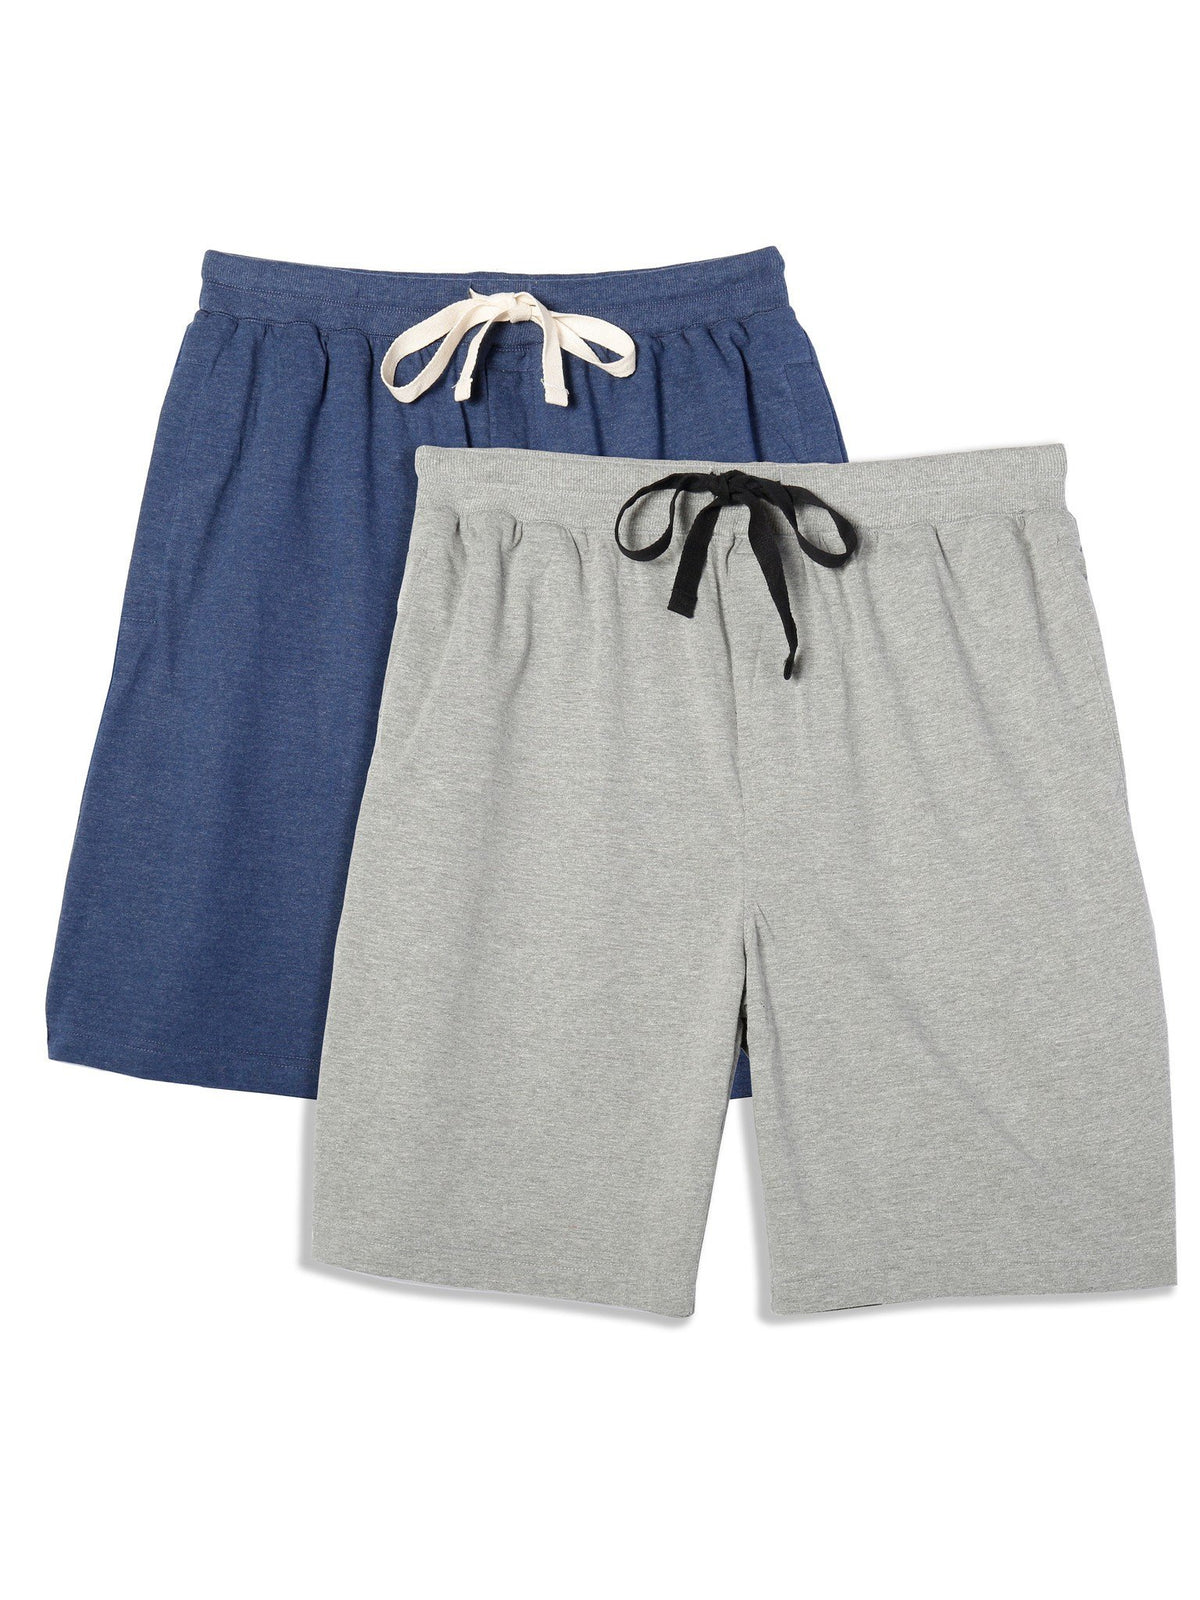 Men's 2-Pack Premium Knit Sleep/Lounge Shorts - Heather Grey/Navy